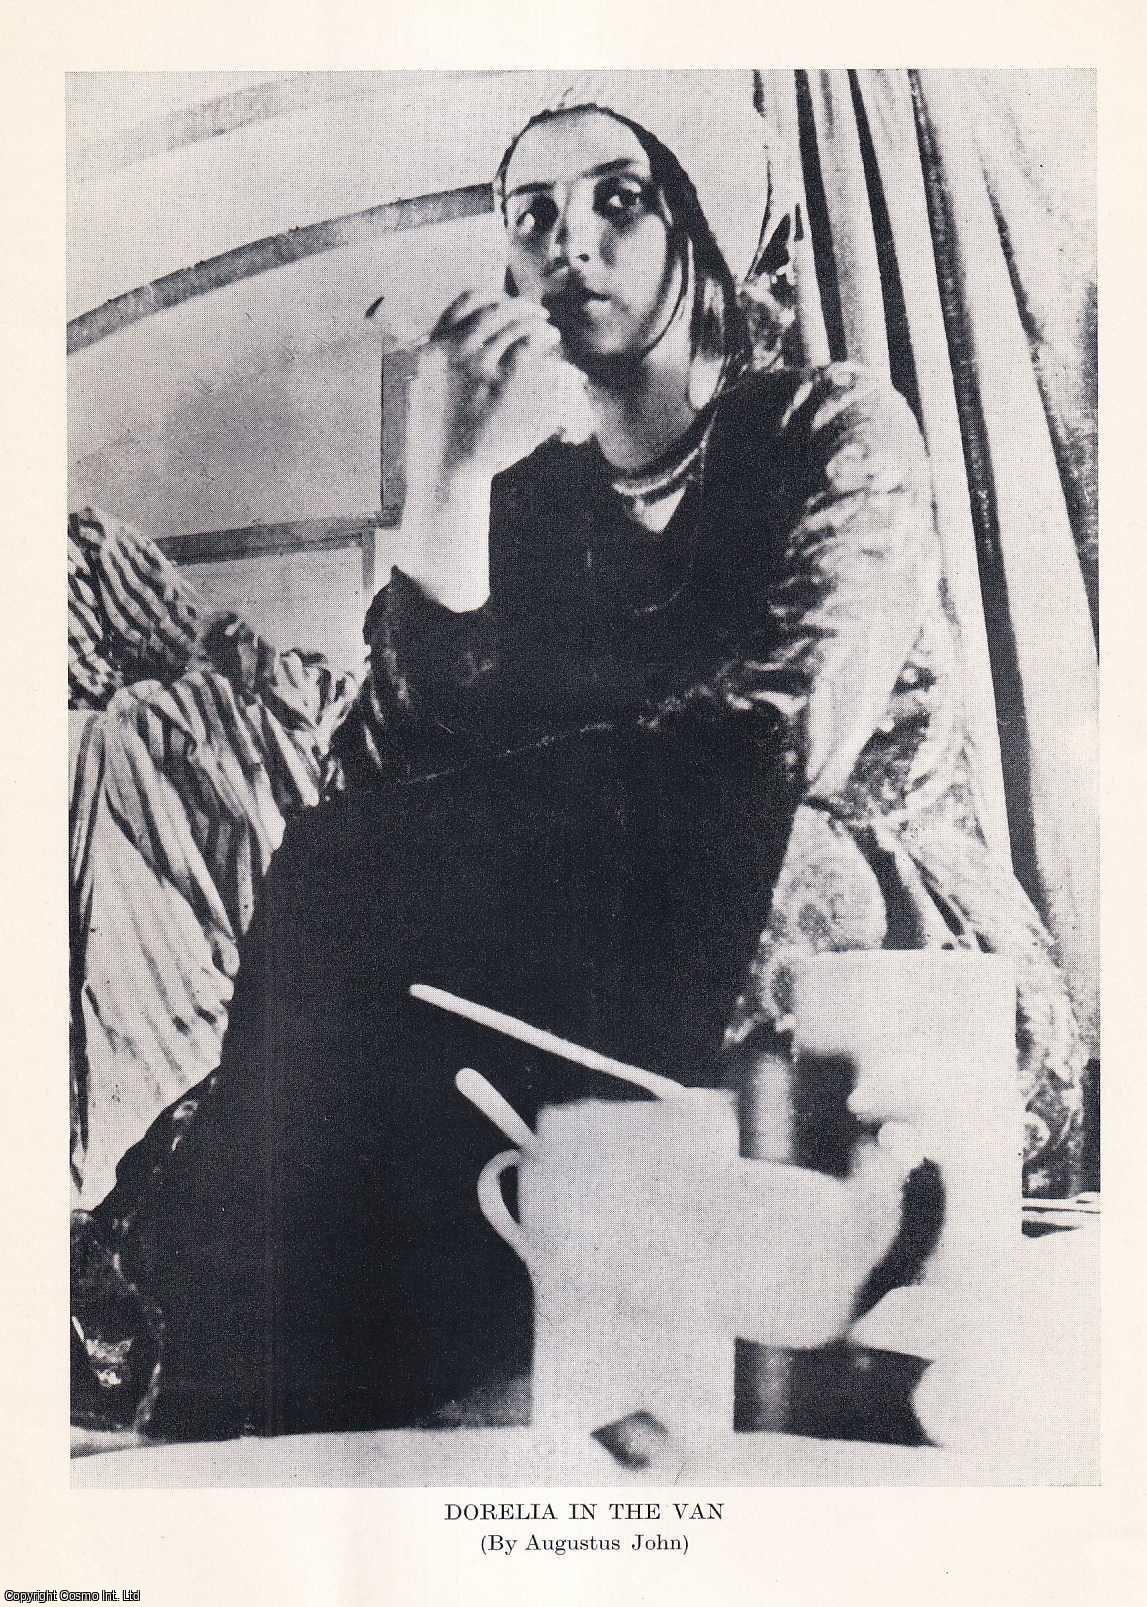 Joseta Jones - Dorelia John: Obituary. An uncommon original article from the Journal of the Gypsy Lore Society, 1970.